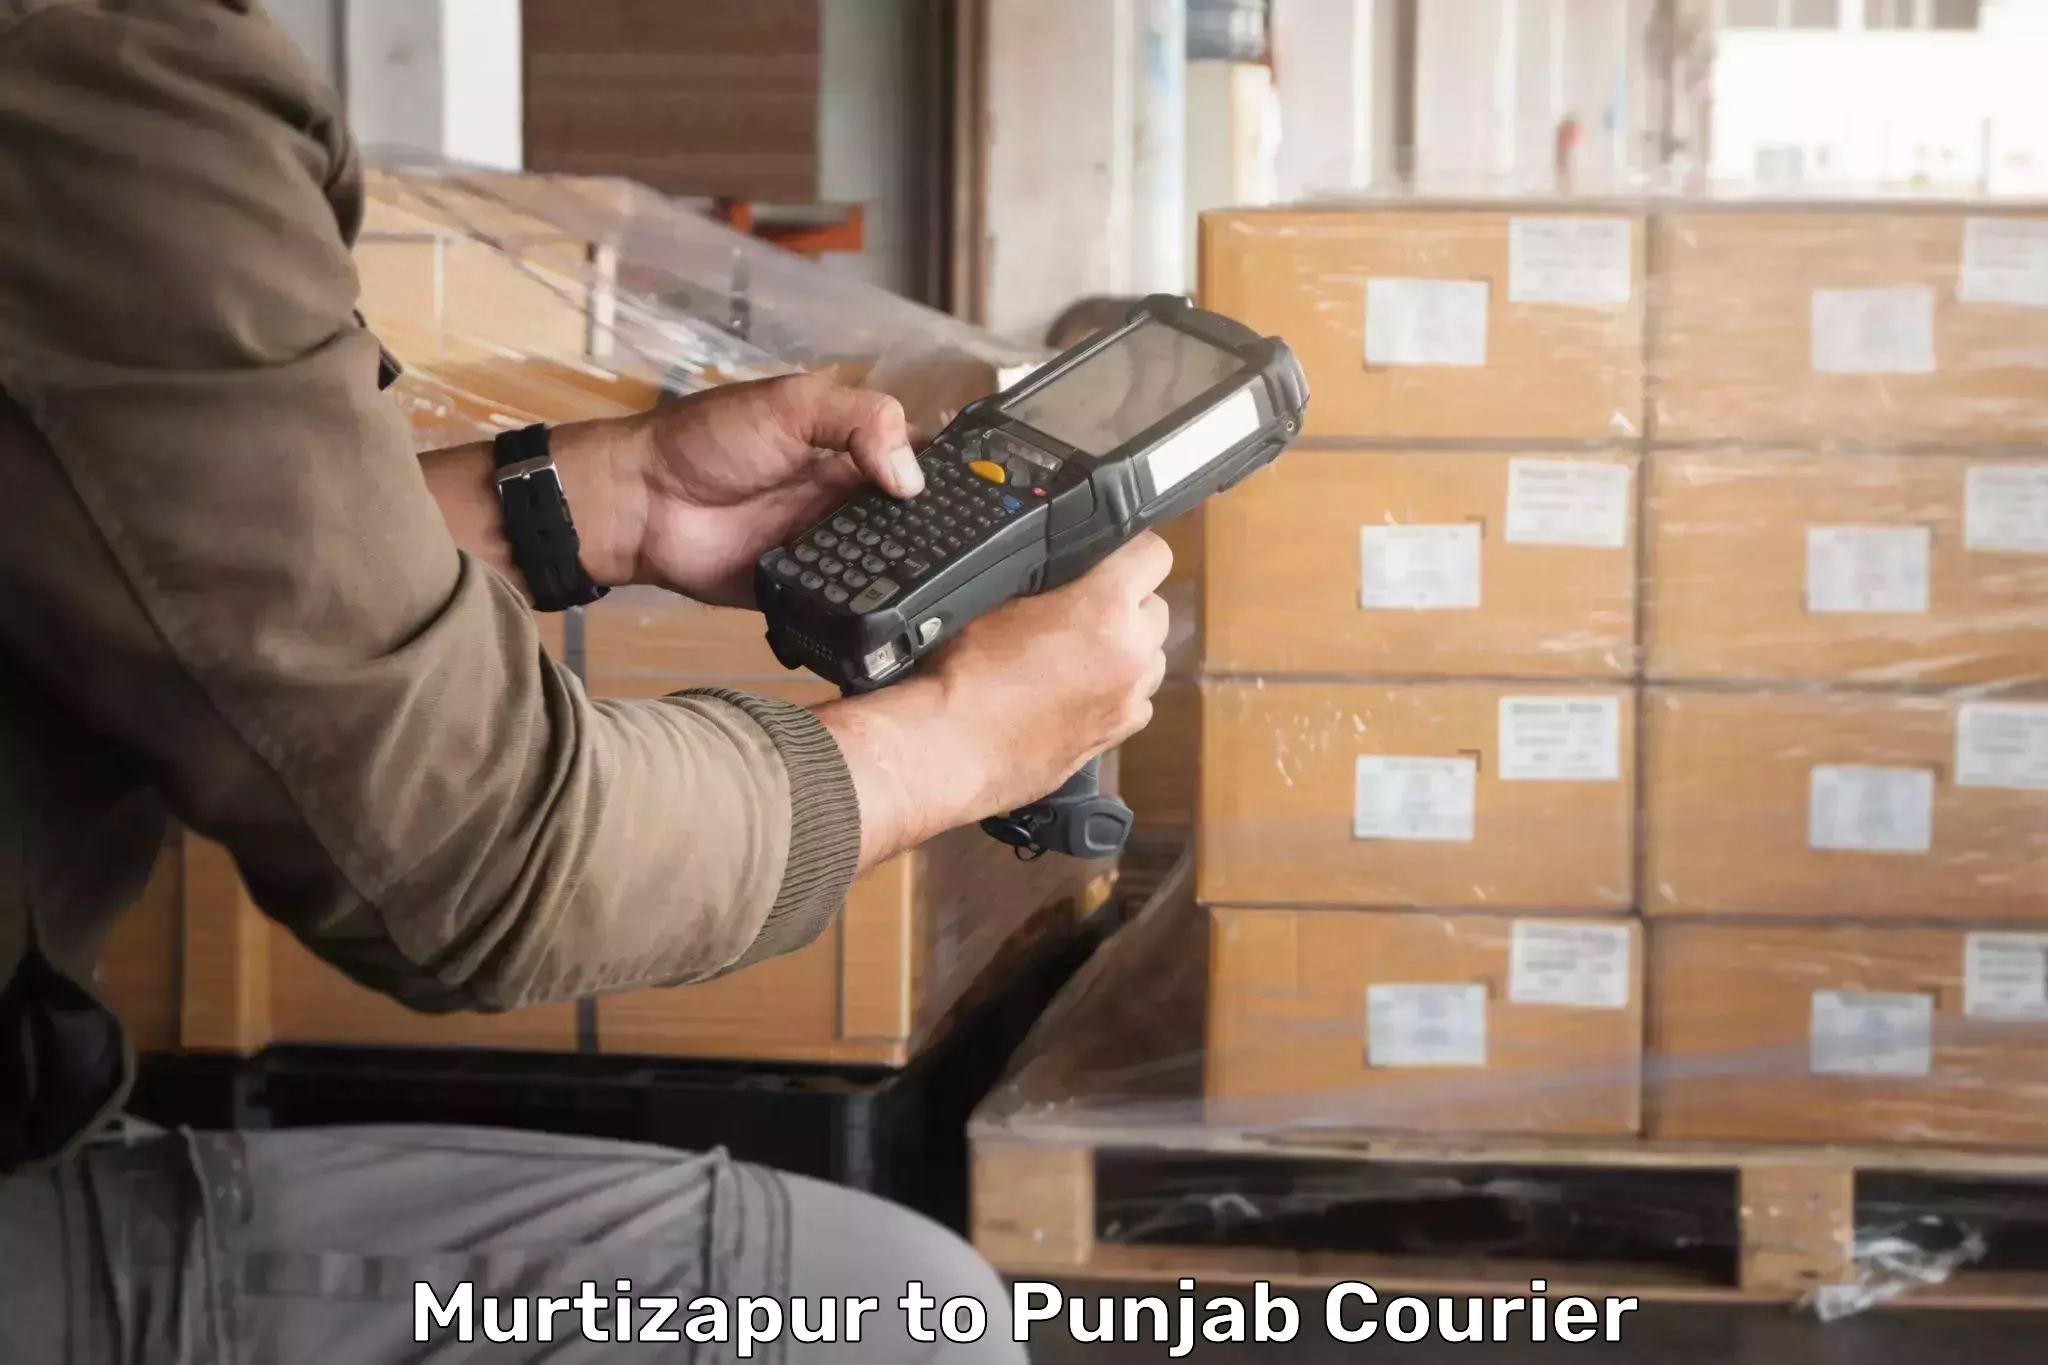 Quick dispatch service Murtizapur to Kotkapura